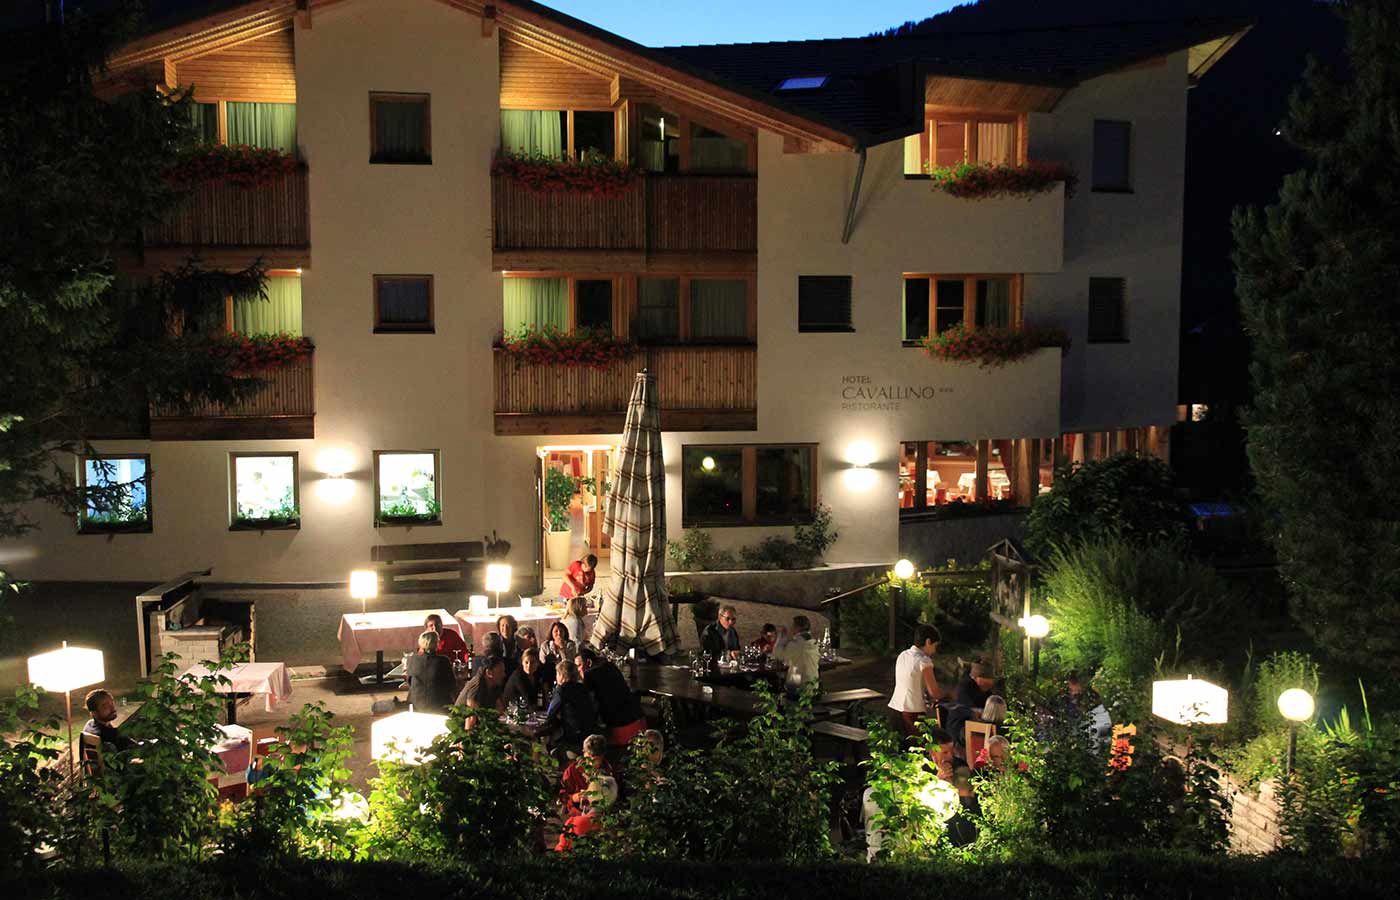 Abendatmosphäre im Hotel Cavallino